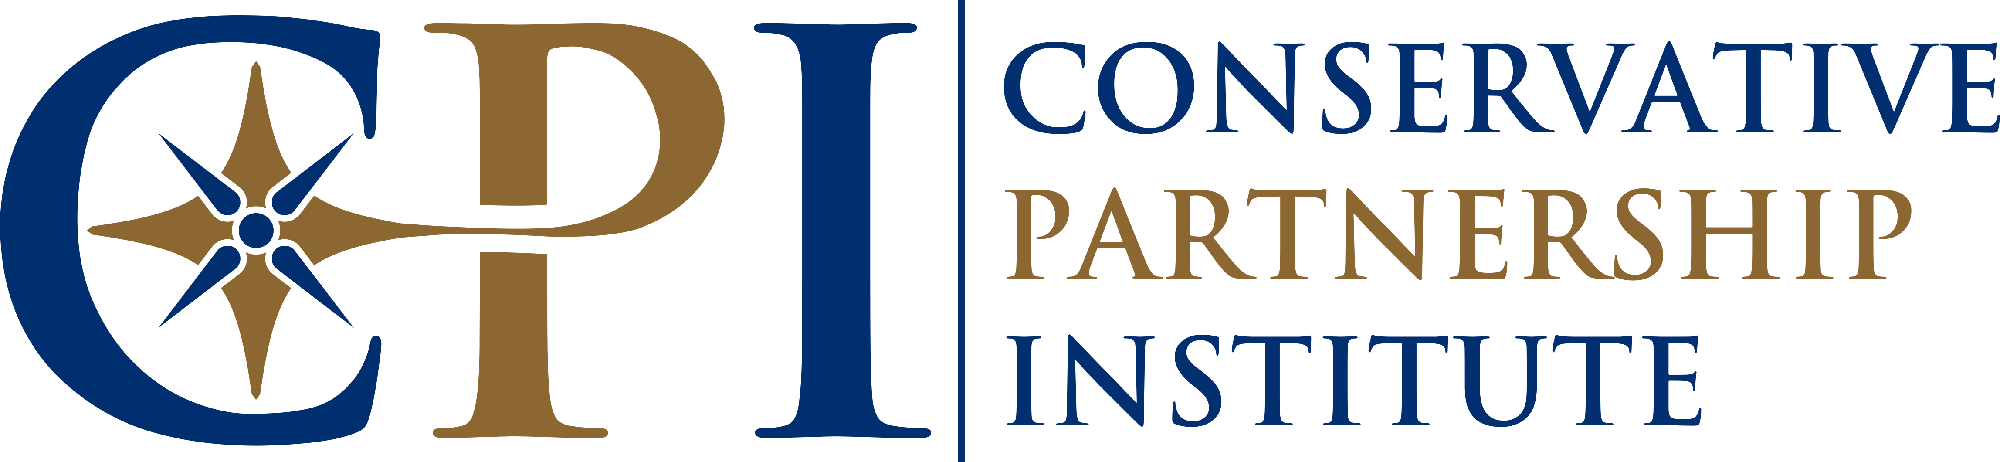 Conservative Partnership Institute